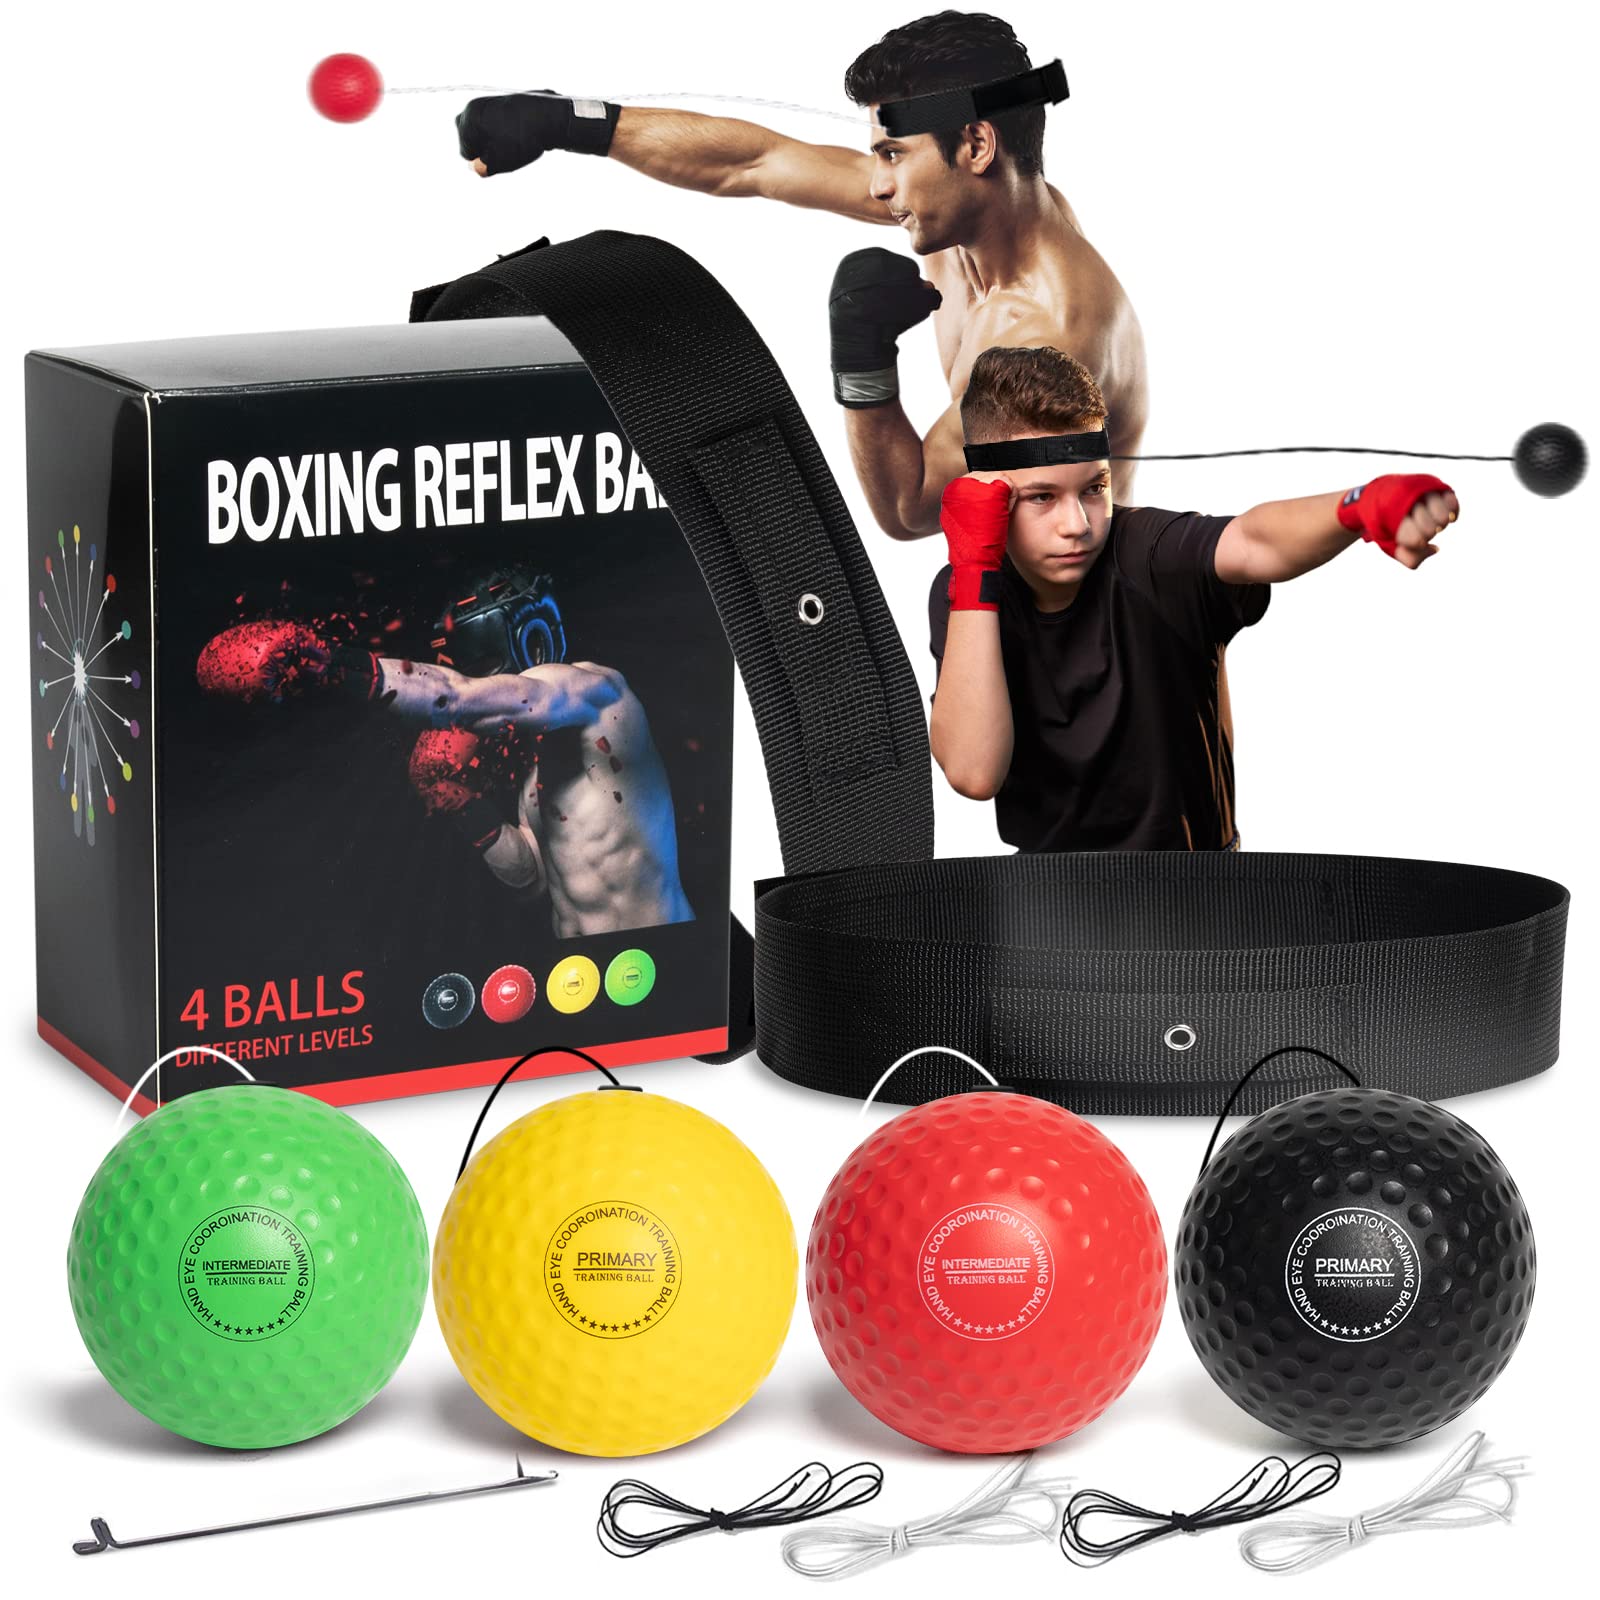 Boxing reflex ball, boxing skills